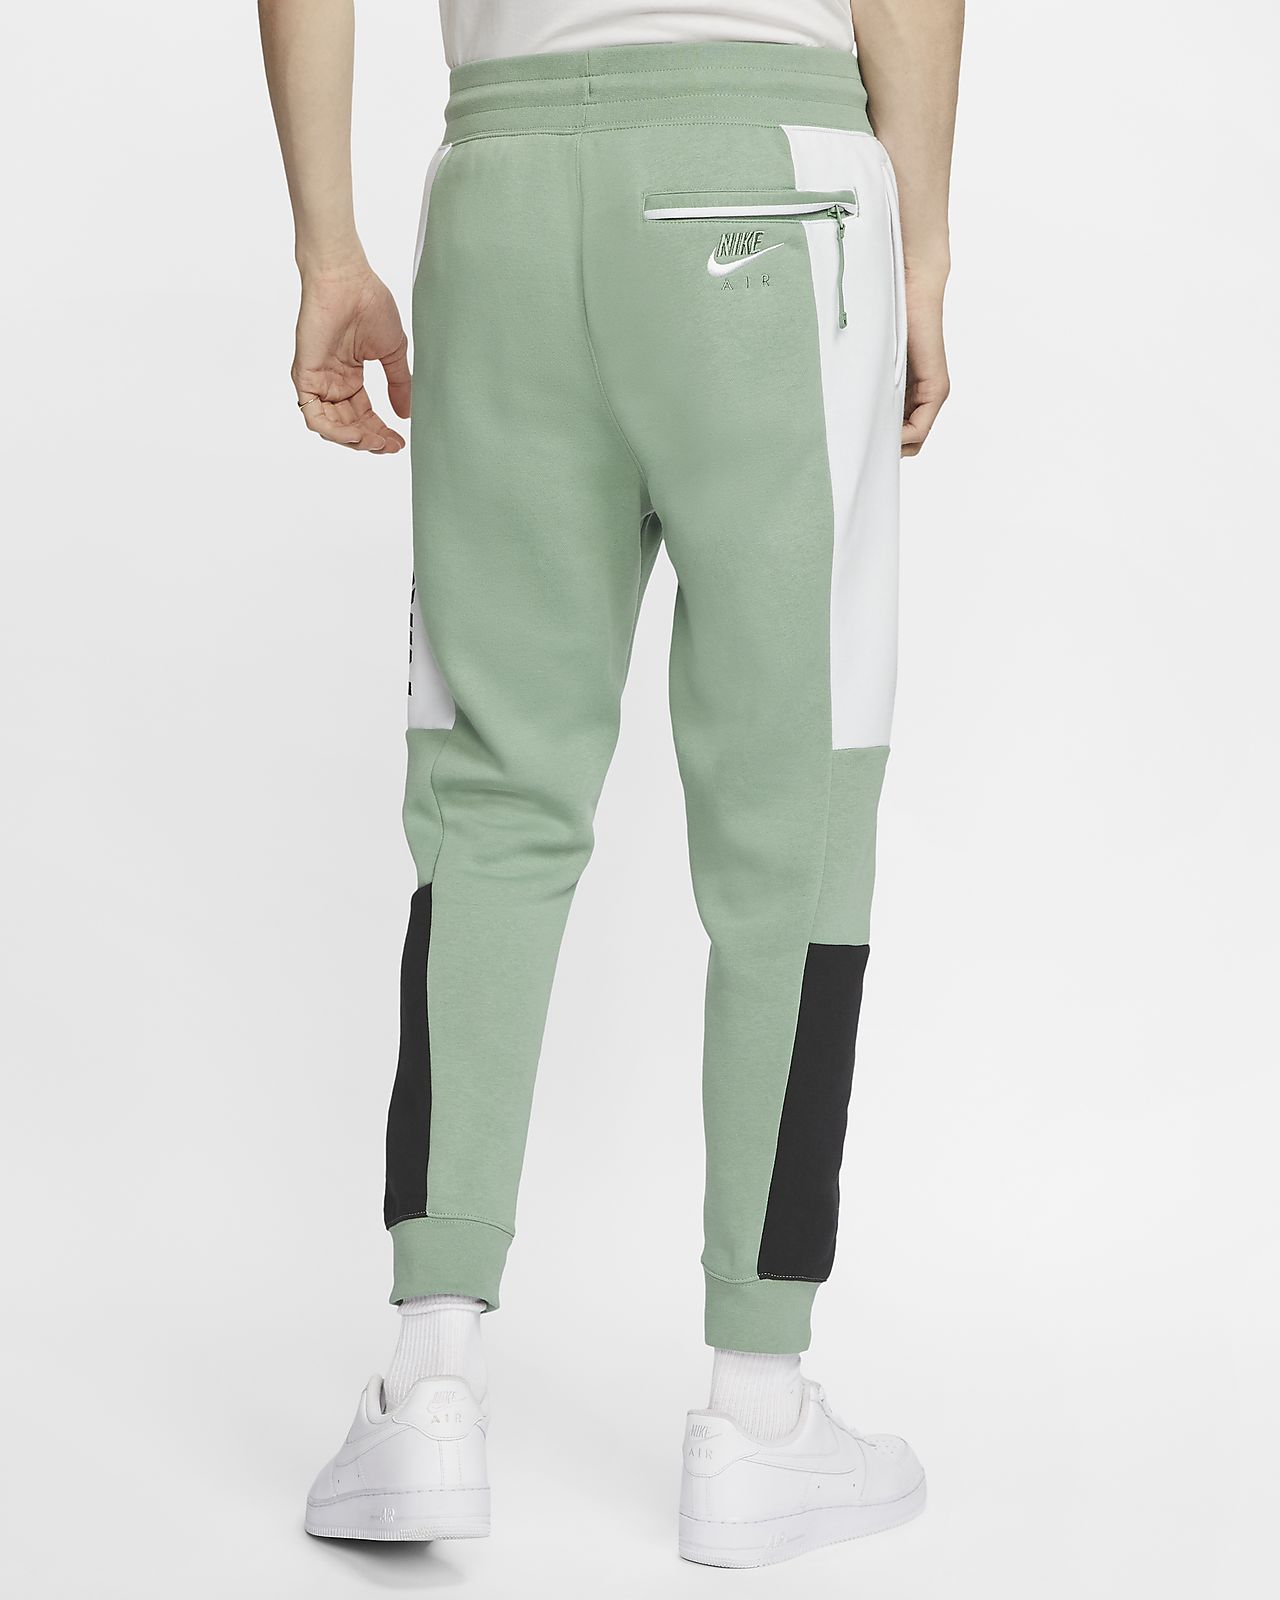 nike green trousers